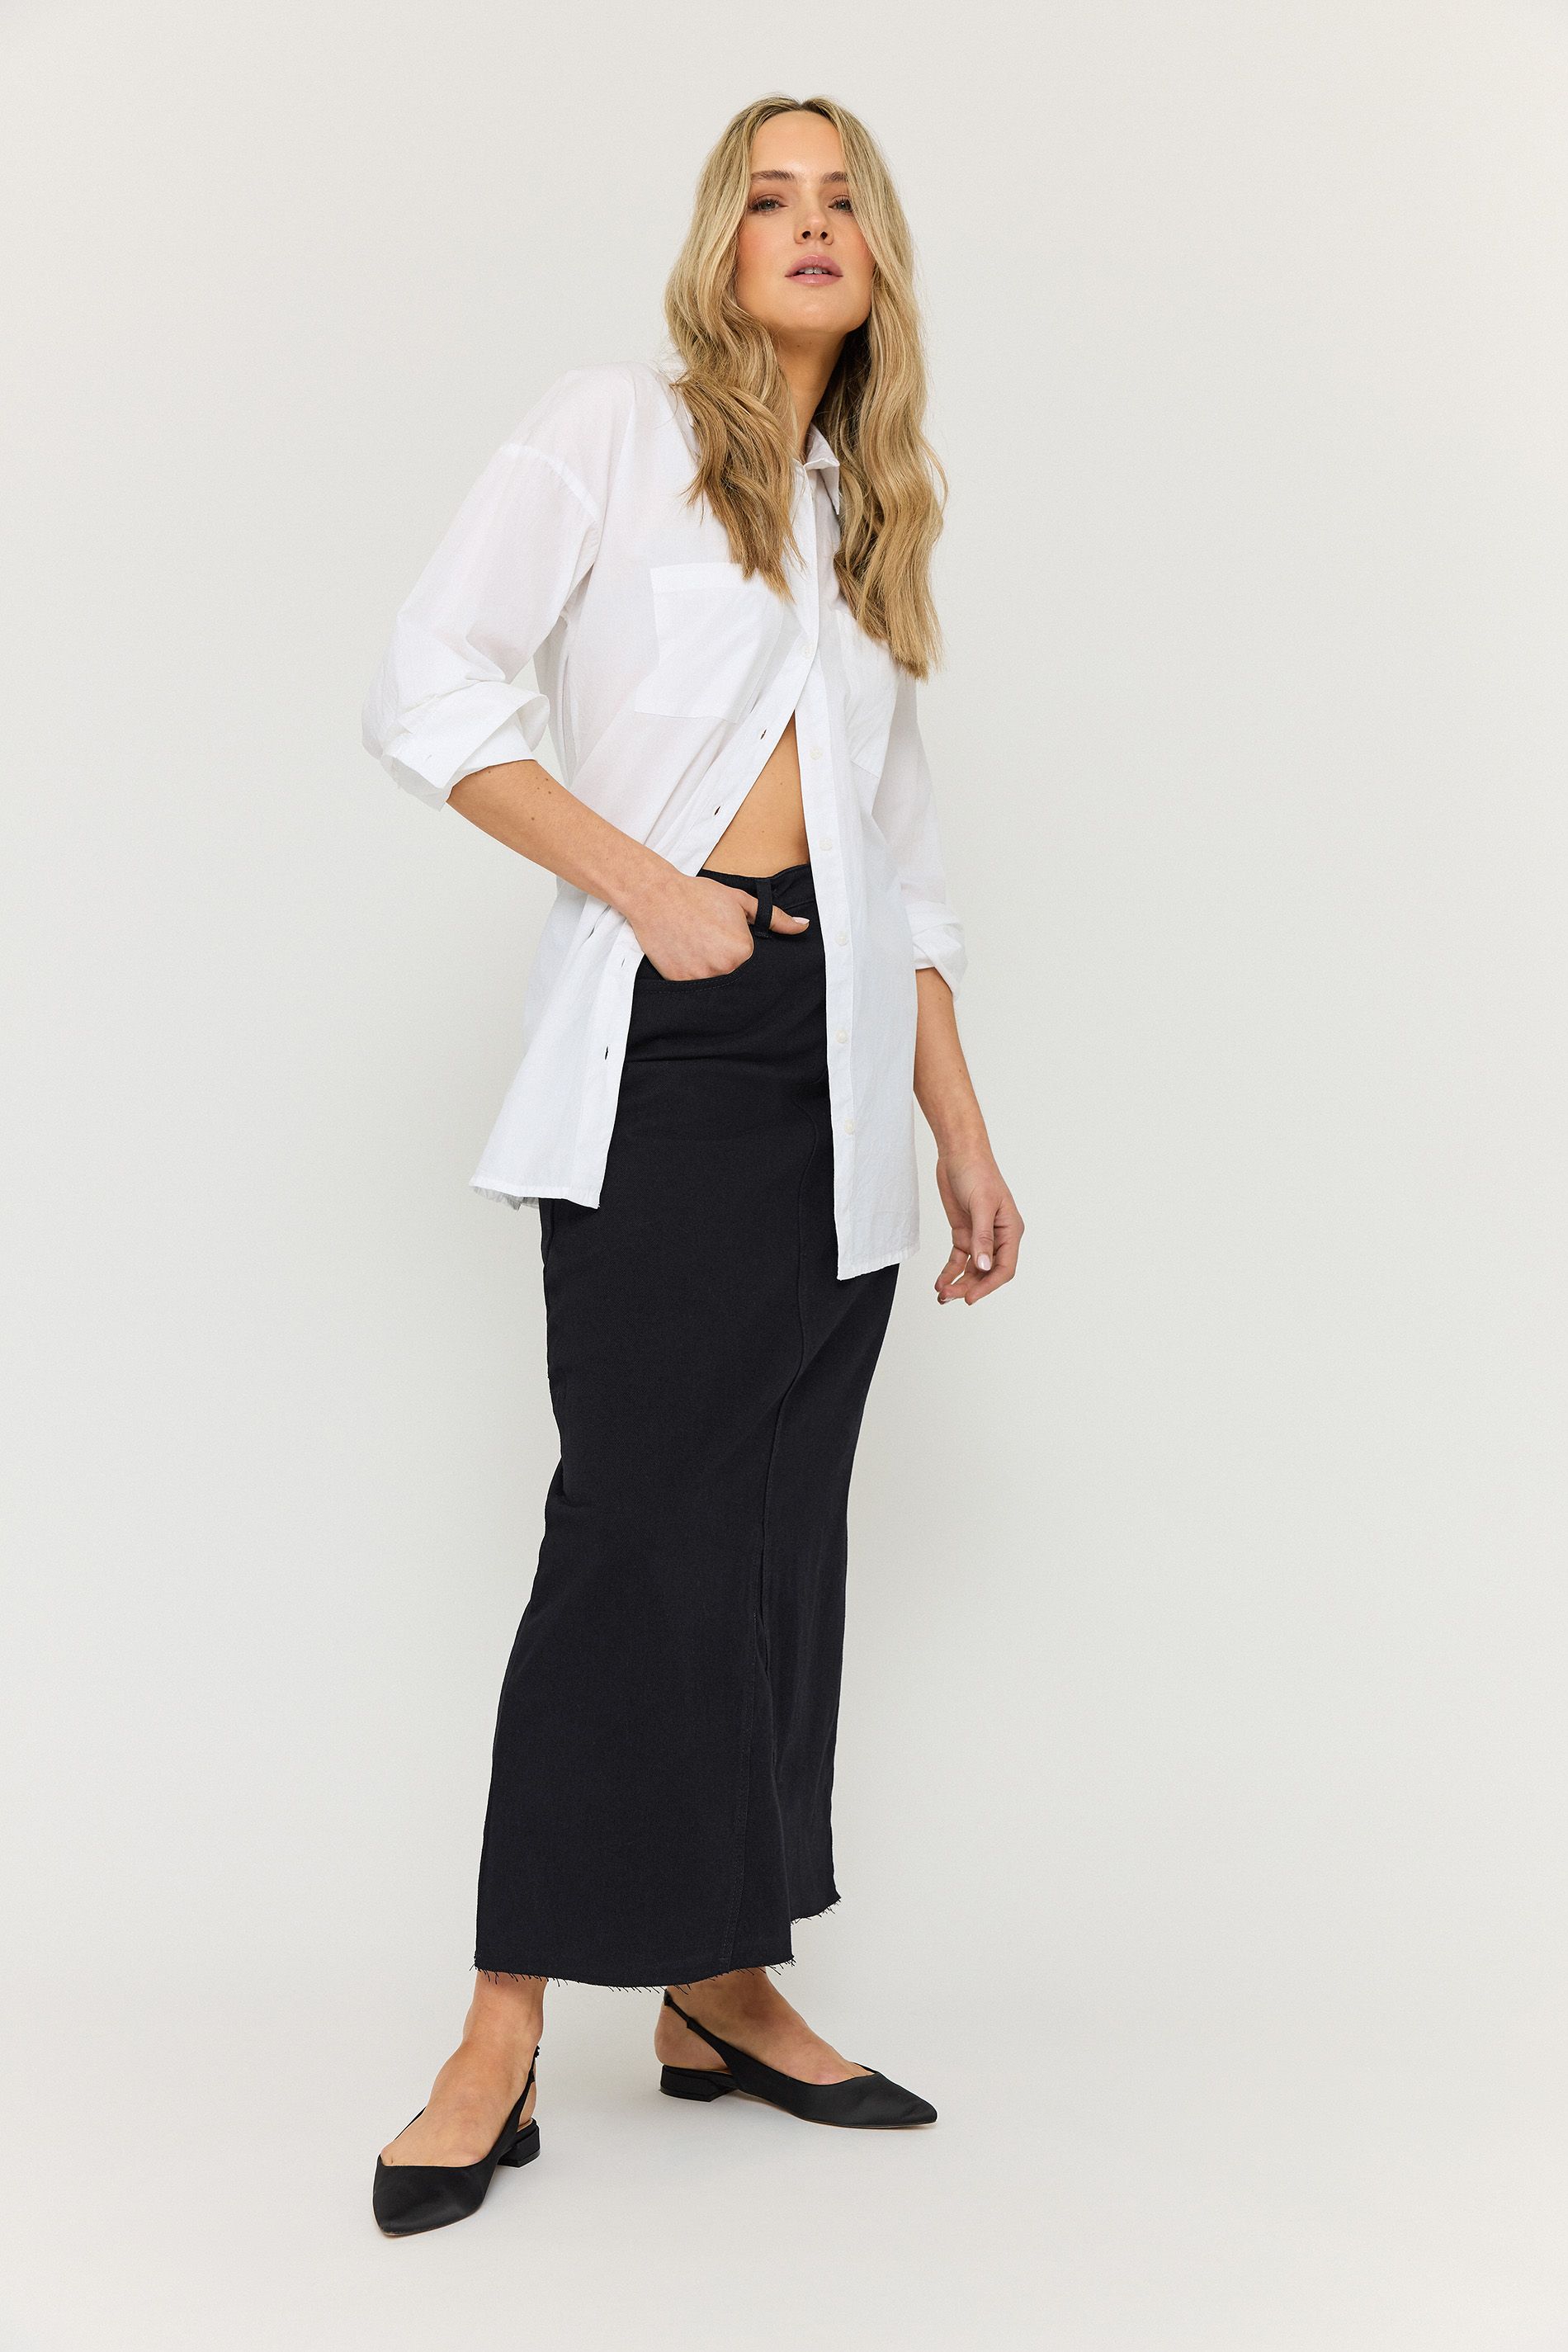 LTS Tall Black Denim Midaxi Skirt | Long Tall Sally